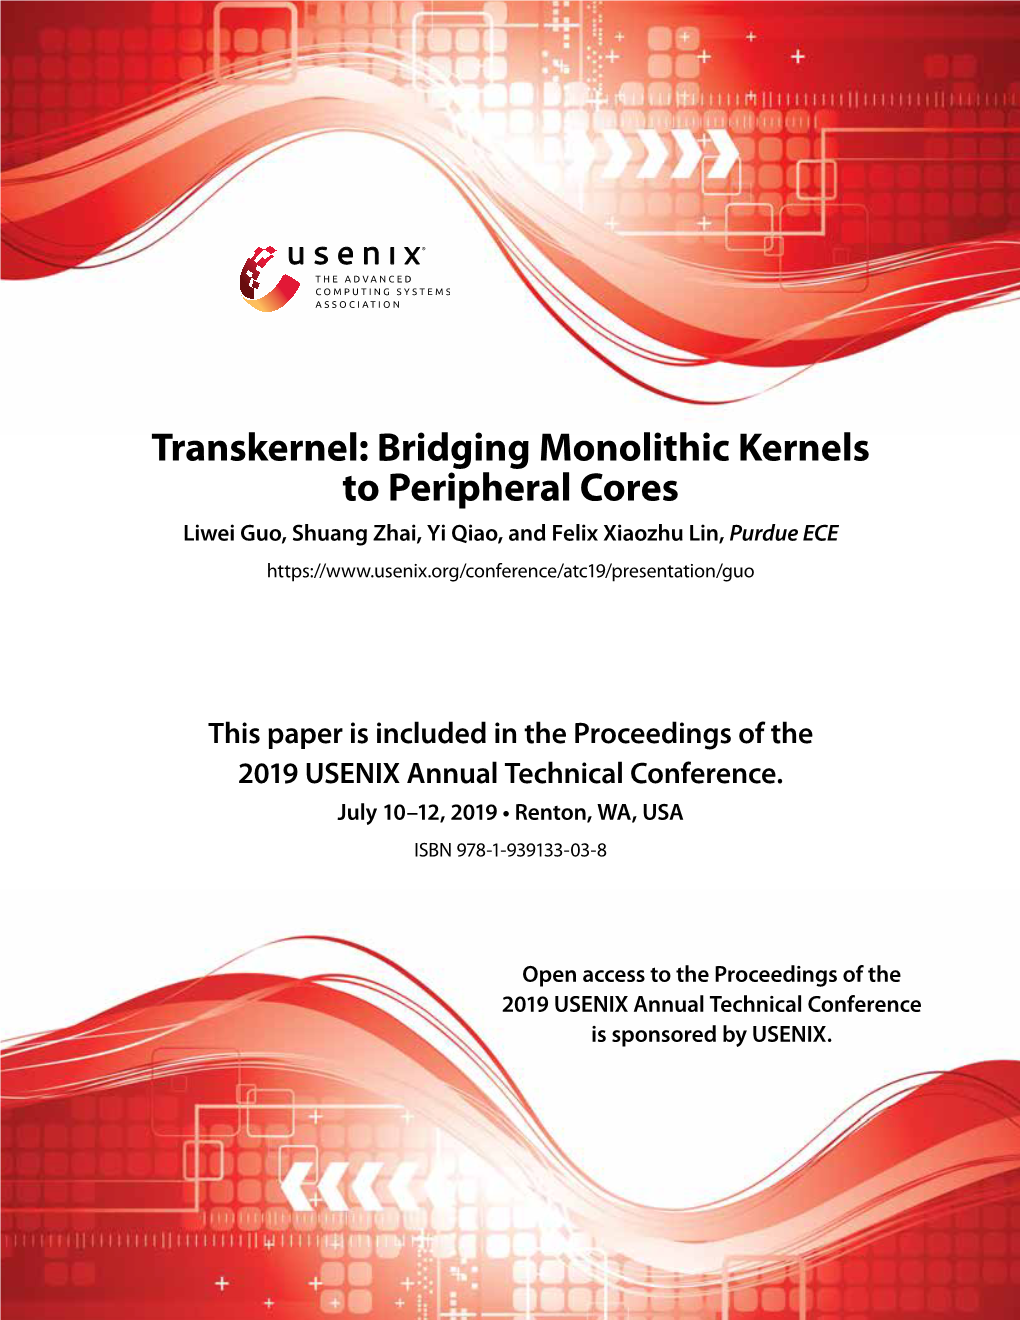 Bridging Monolithic Kernels to Peripheral Cores